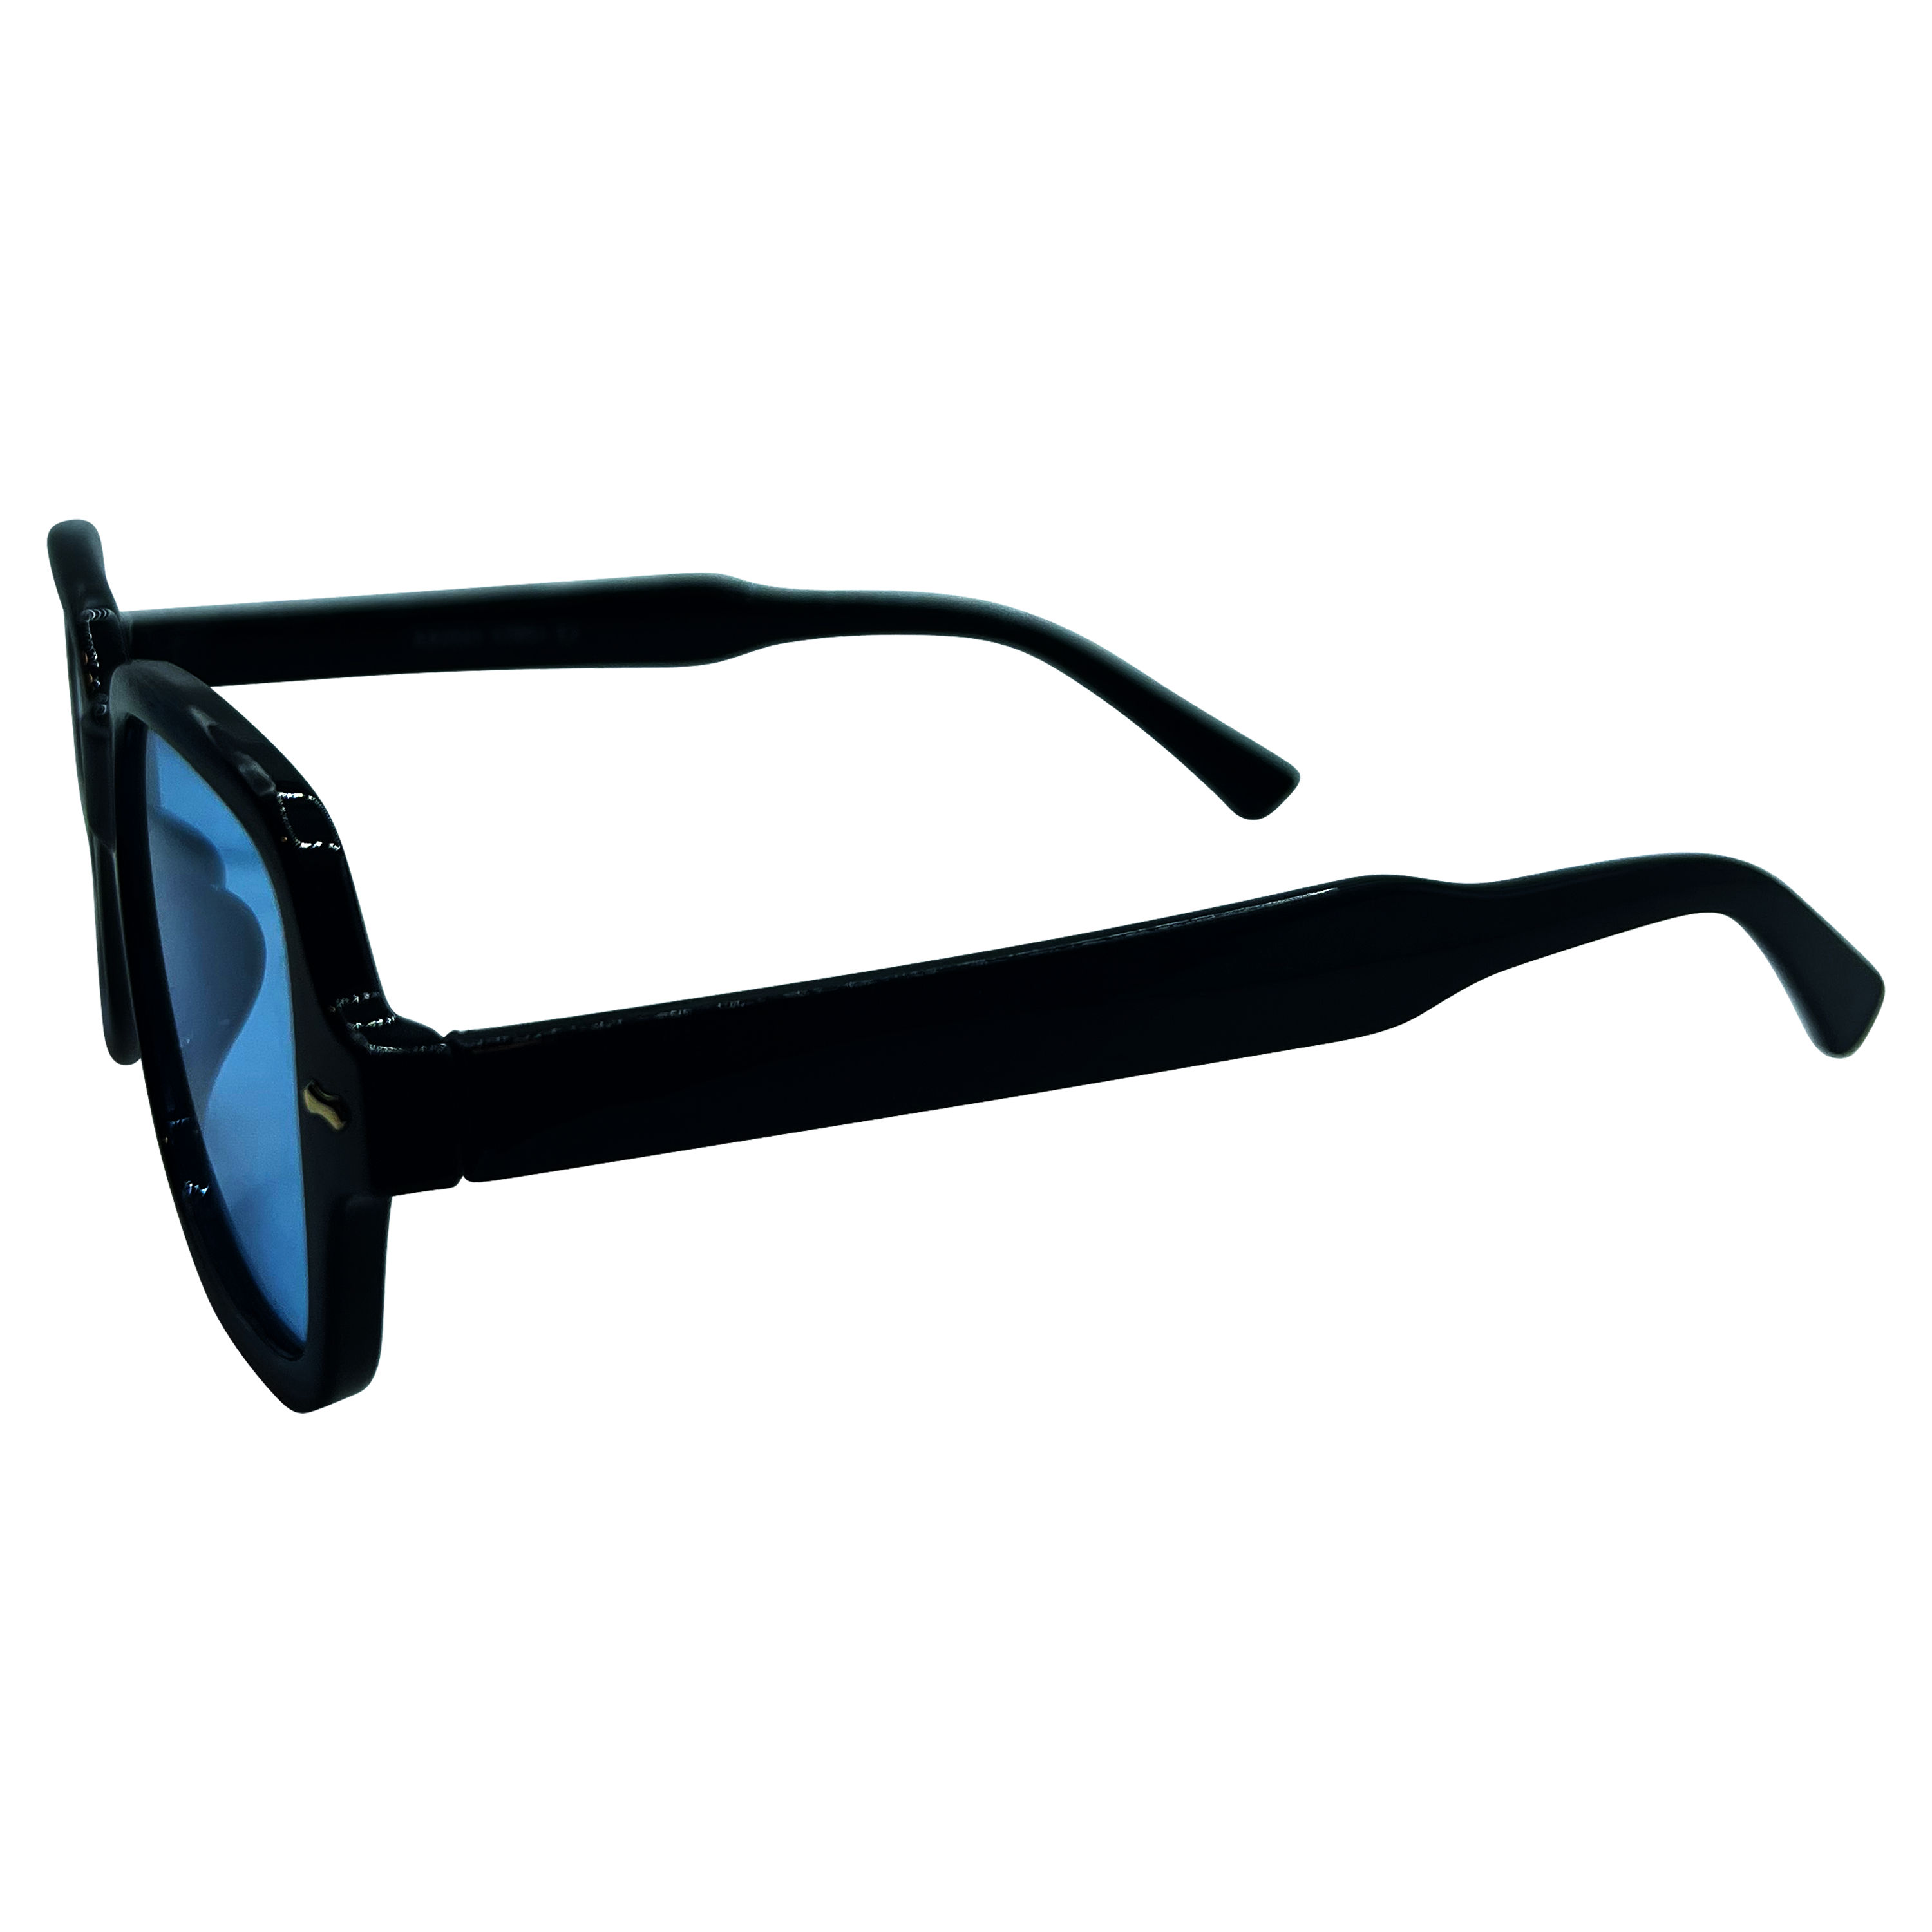 CANCELED Blue Sunglasses